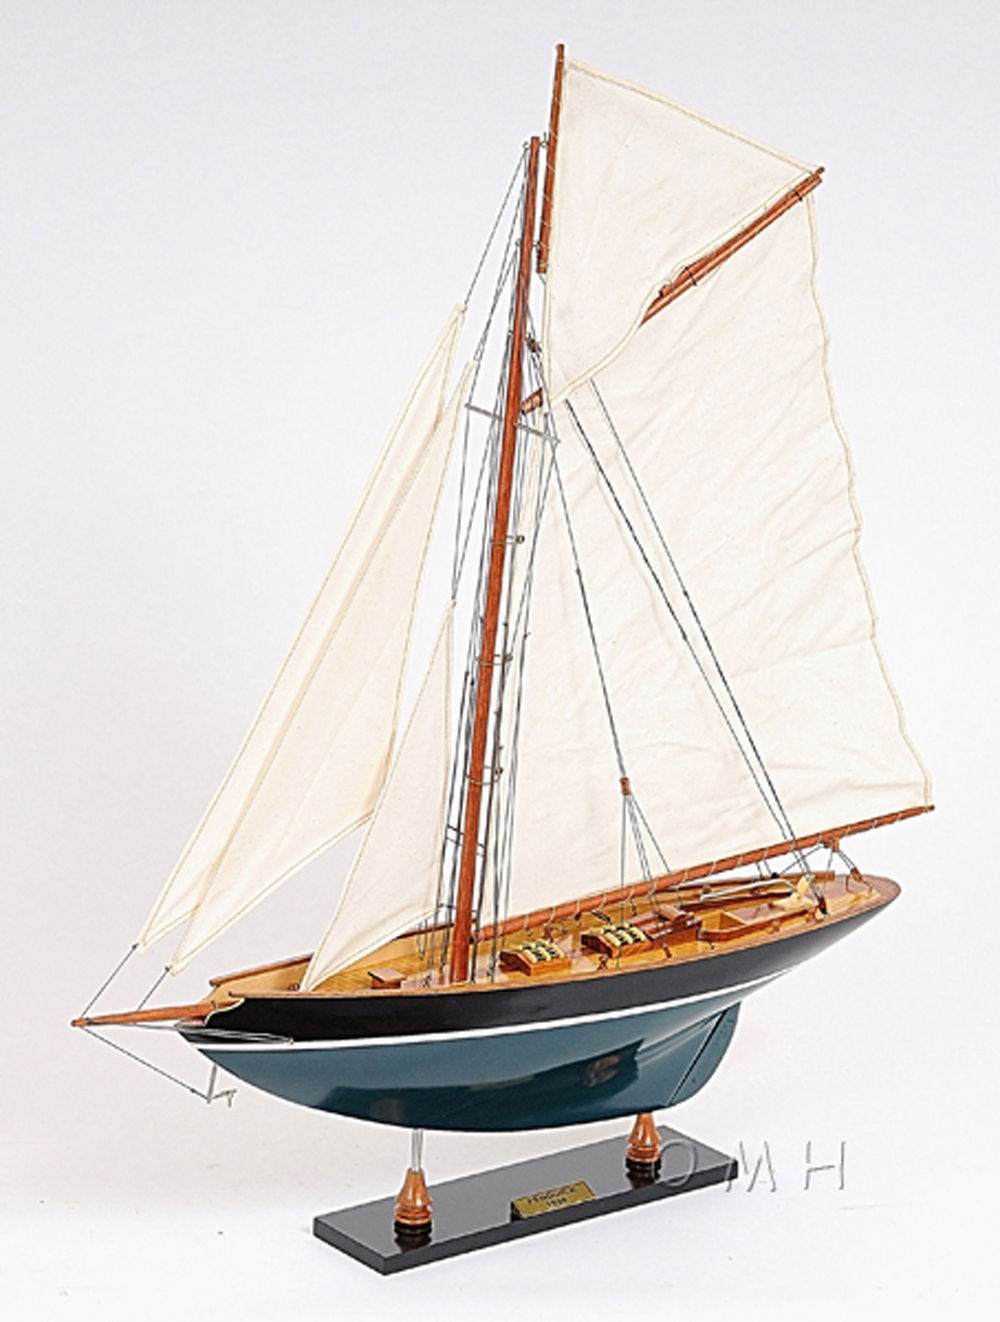 Pen Duick Wooden Sailboat Legendary Racing Model Replica, Ship